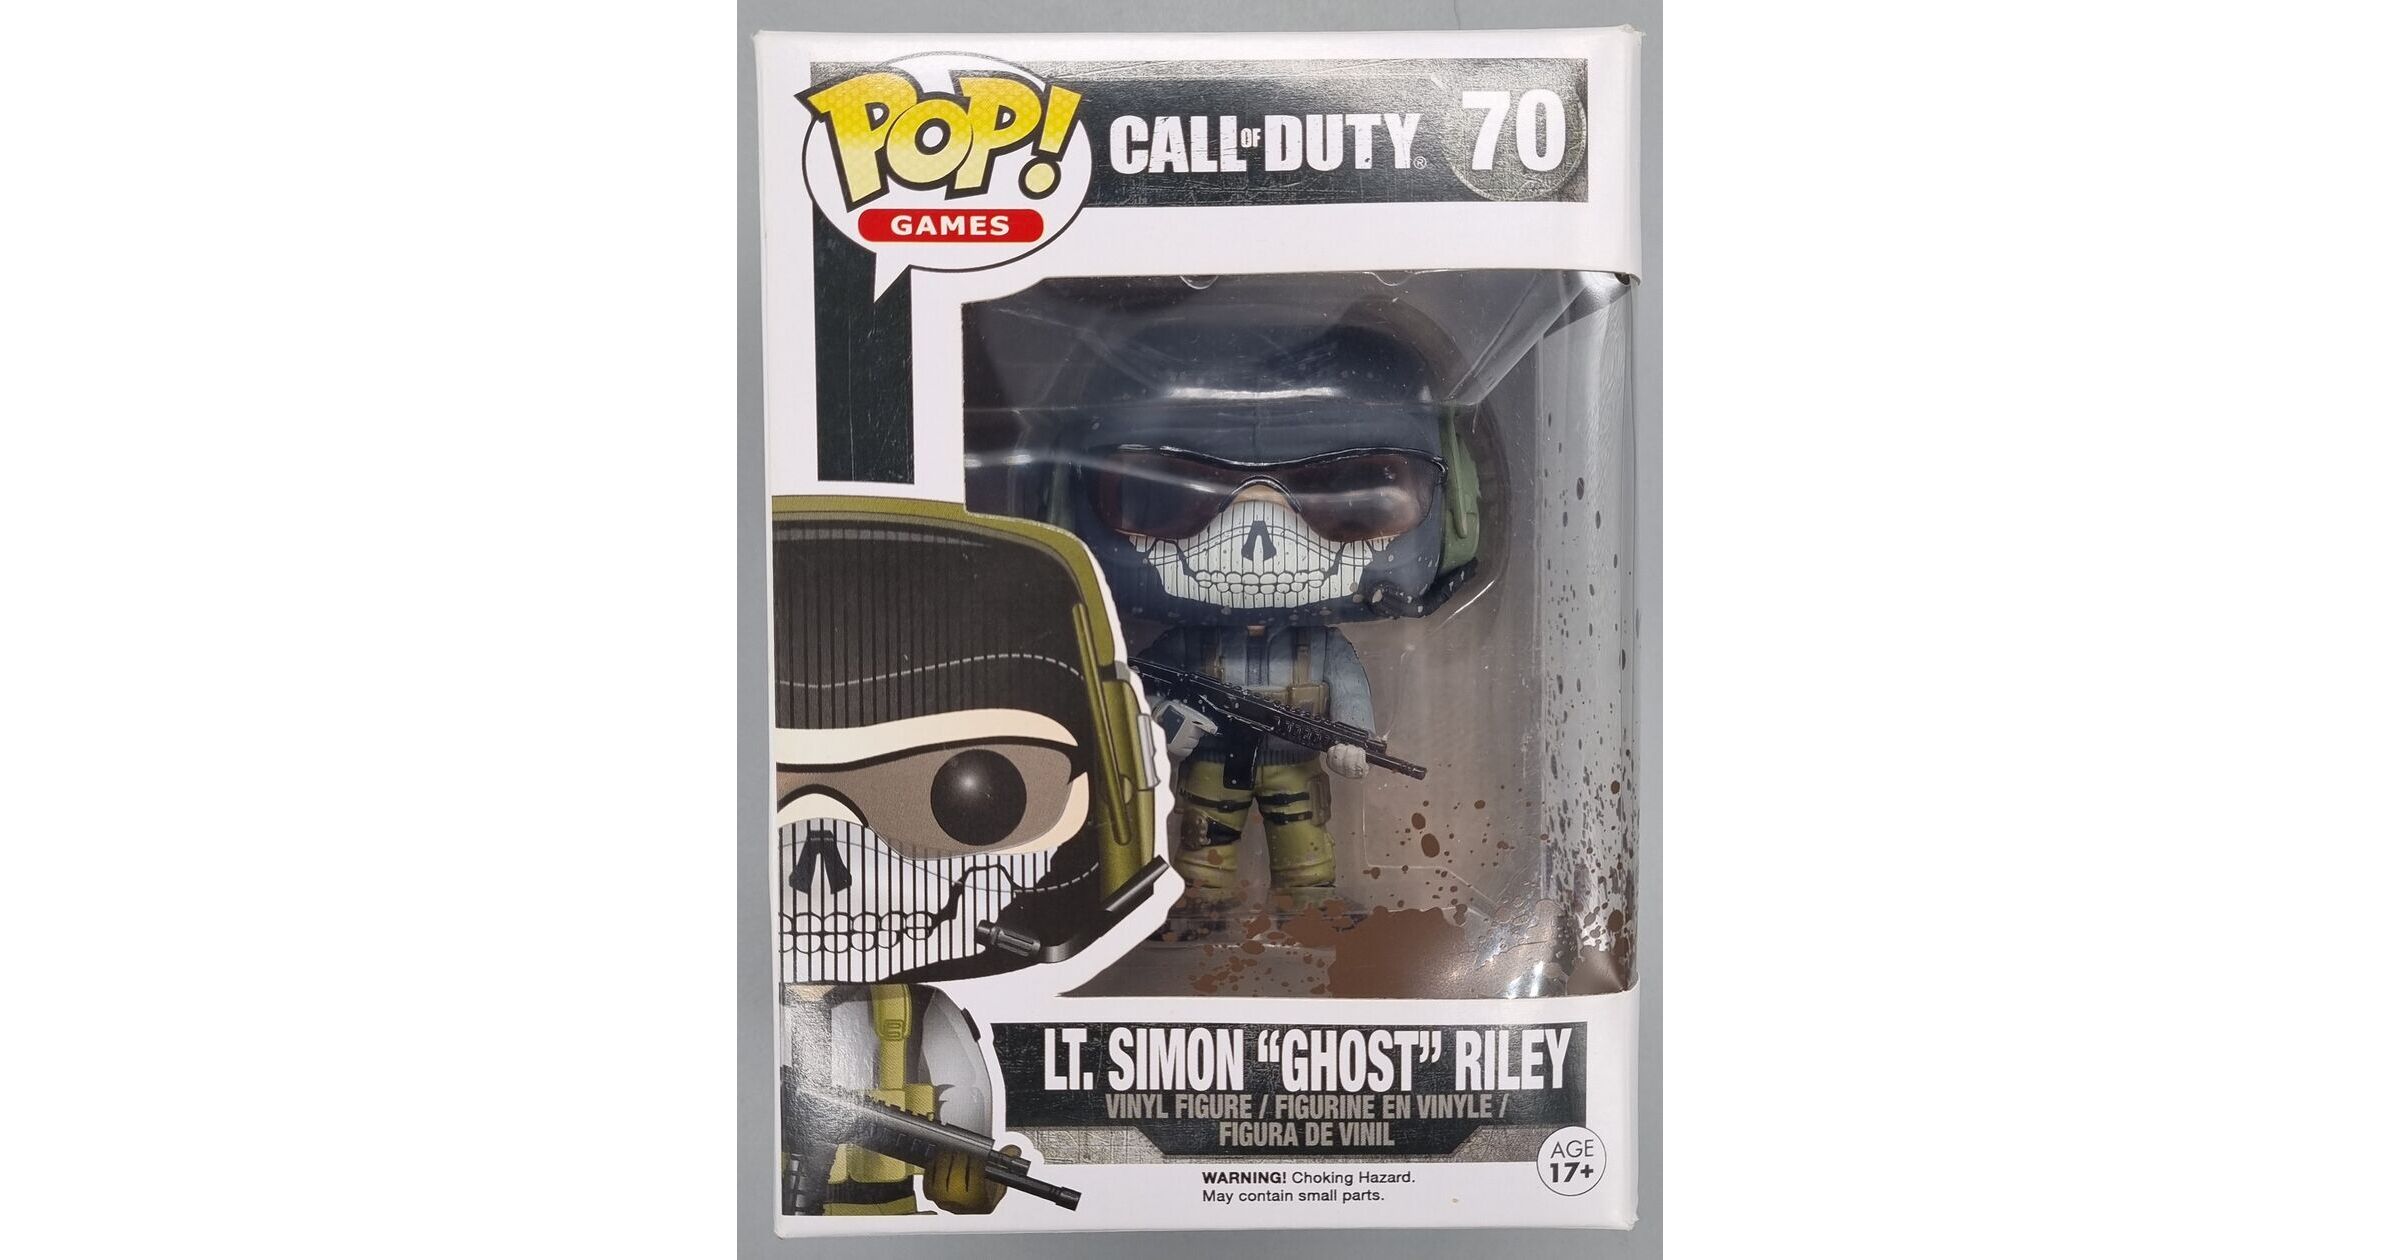 Funko Pop! Games Call of Duty Lt. Simon (Ghost) Riley Figure #70 - US